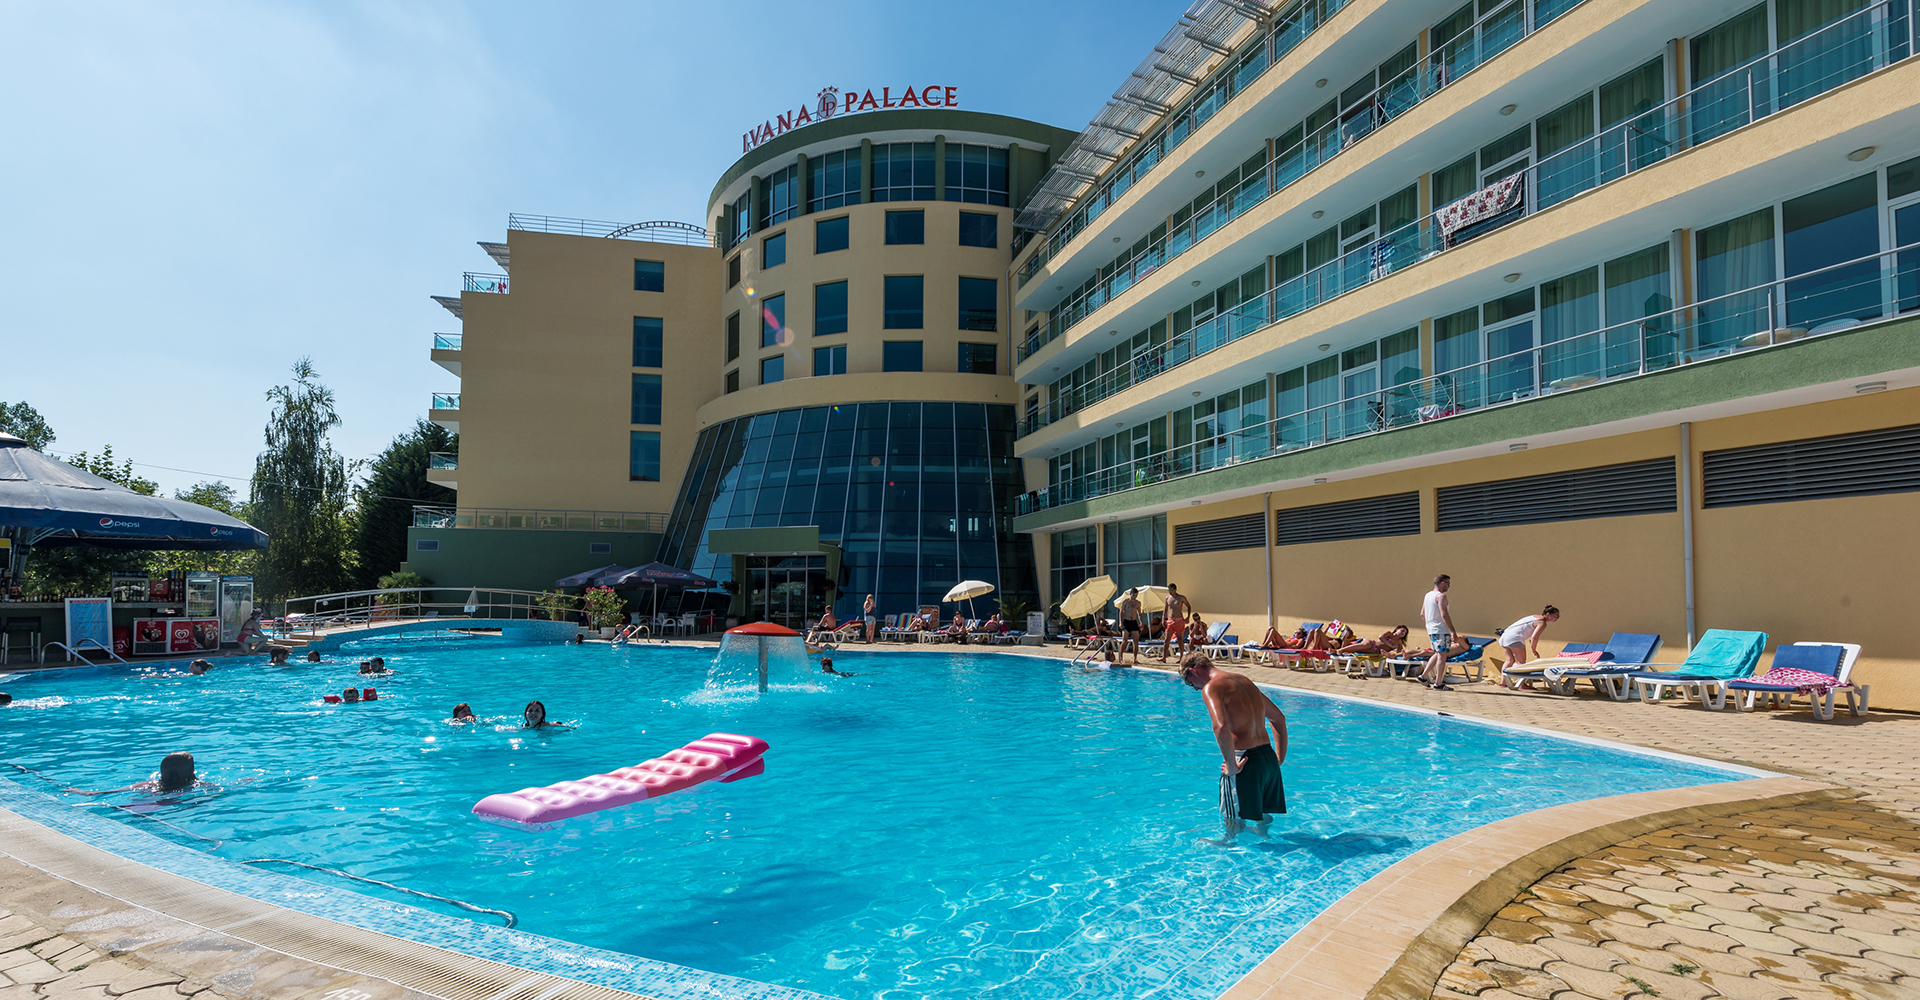 Letovanje Bugarska autobusom, Sunčev breg, Hotel Ivana Palace, hotelski bazen